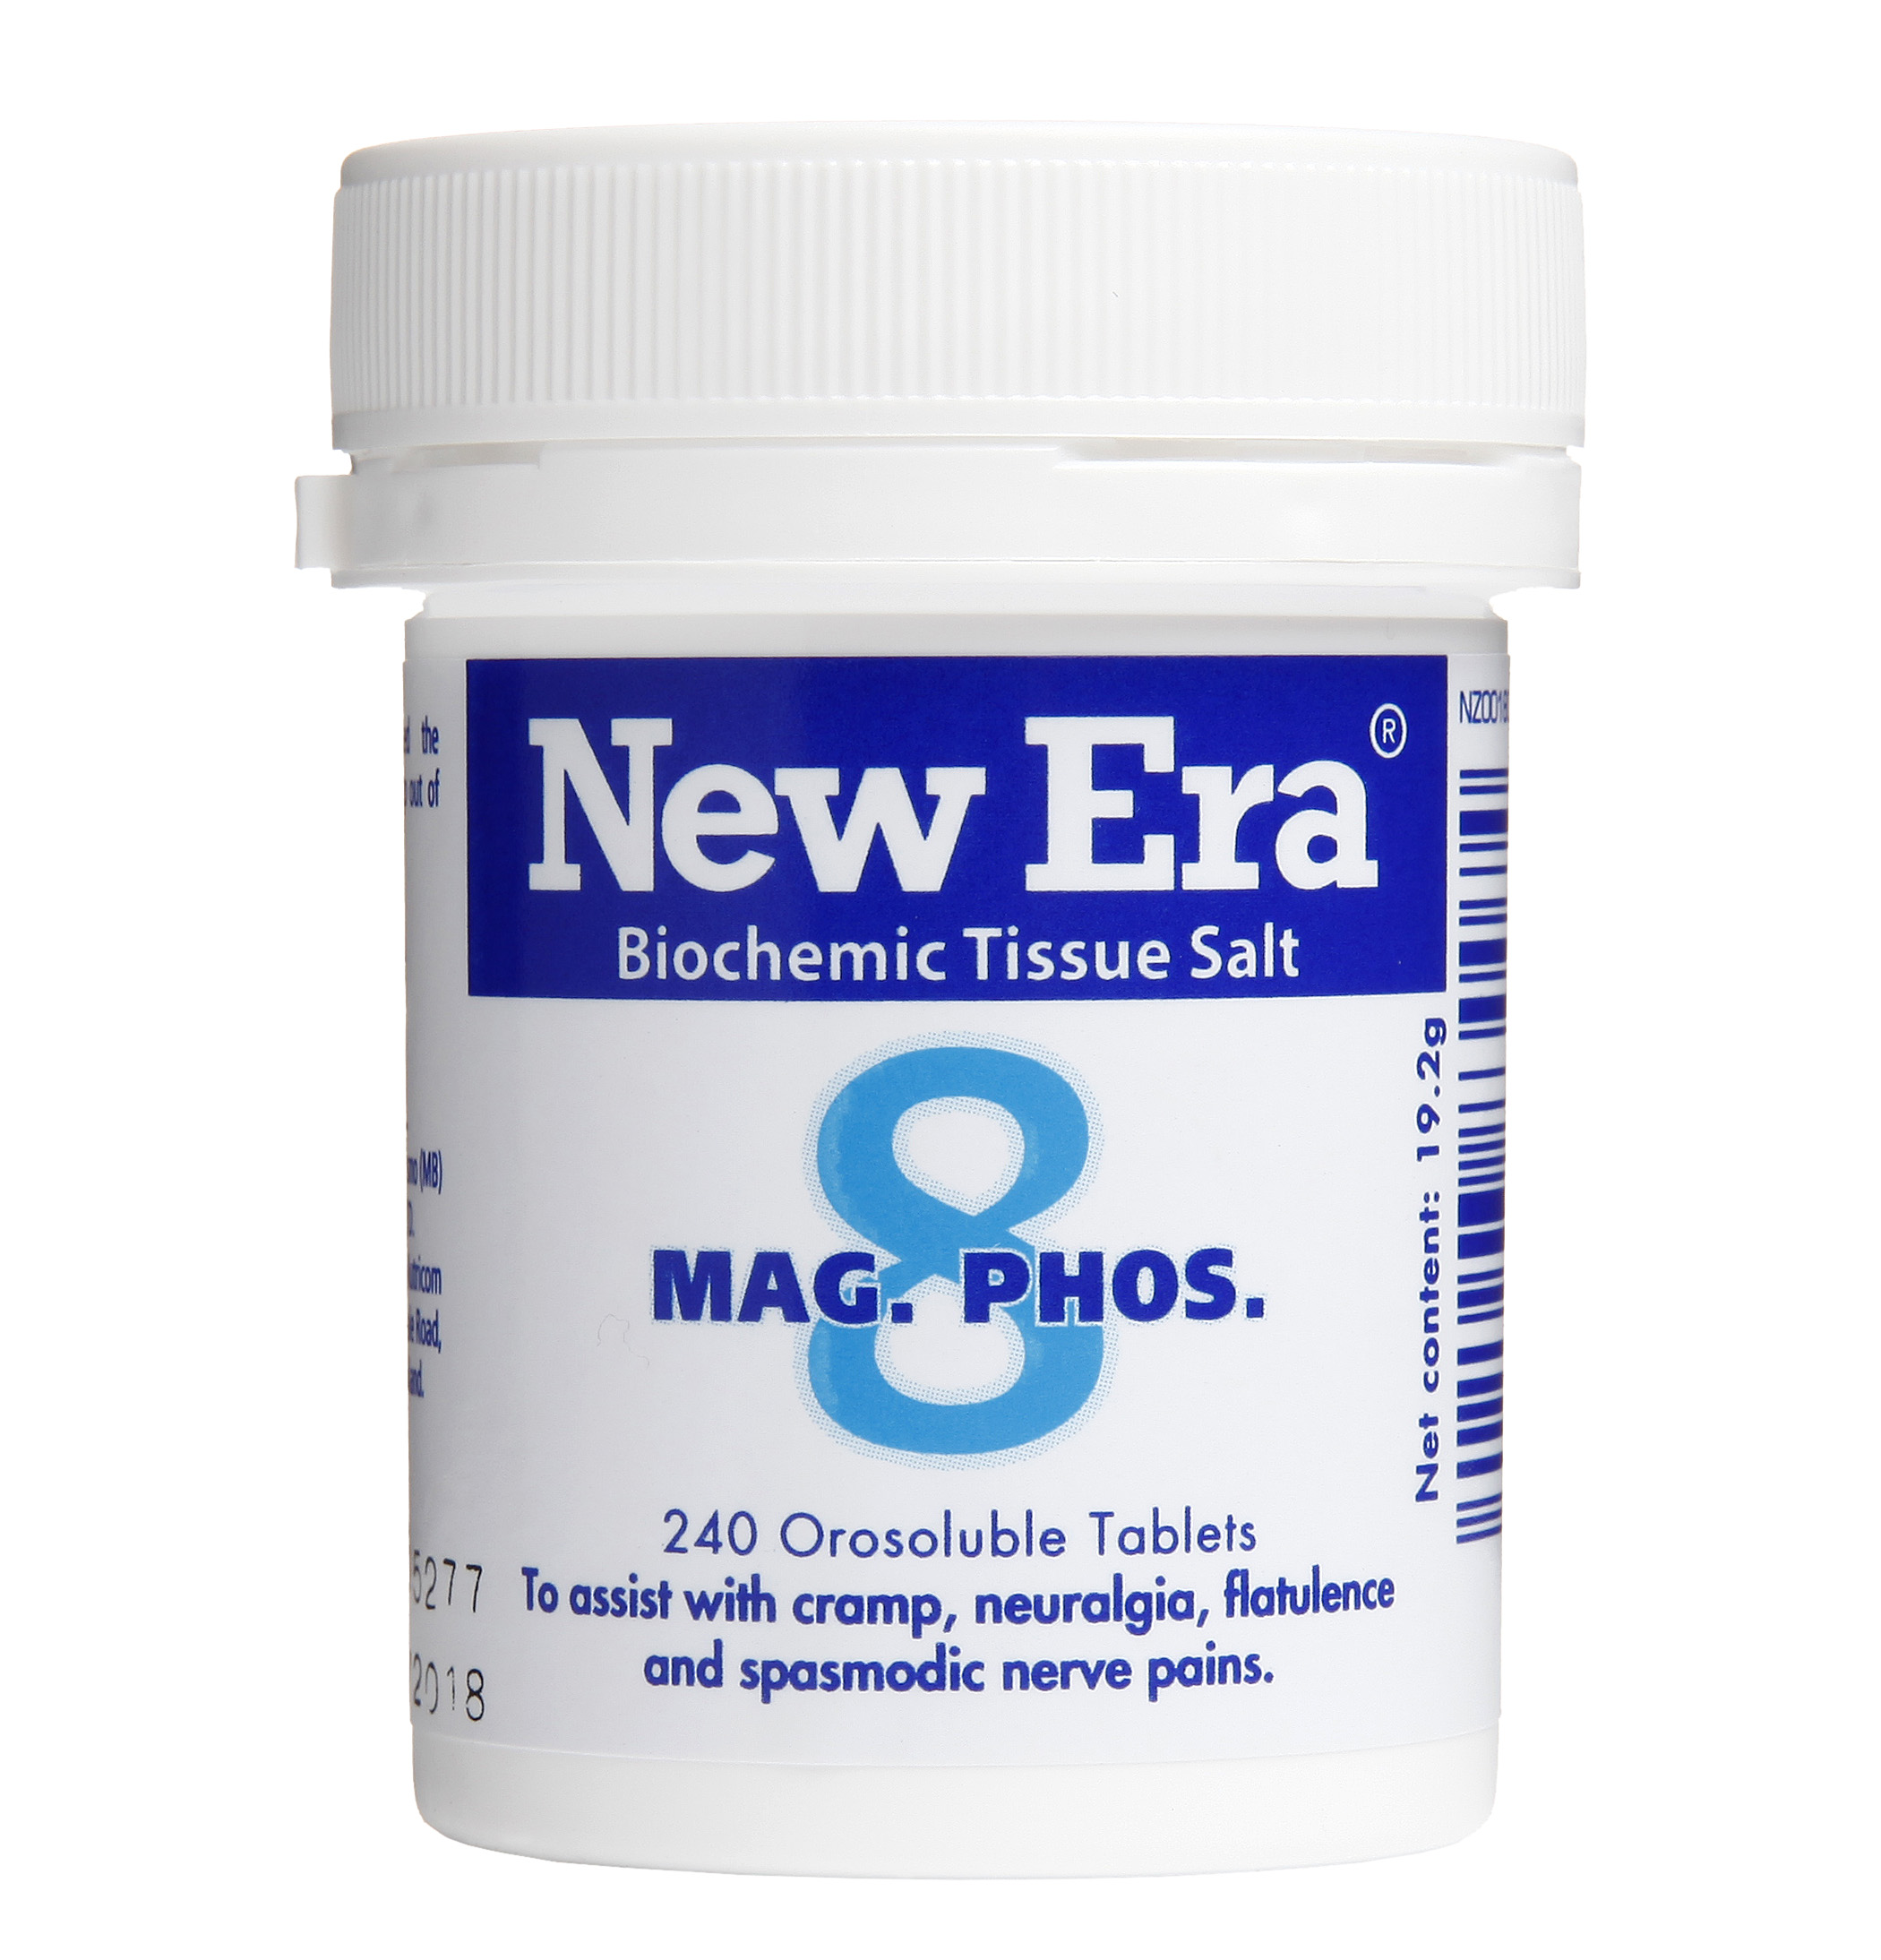 New Era Tissue Salt Mag. Phos. #08 - The Muscle Nutrient